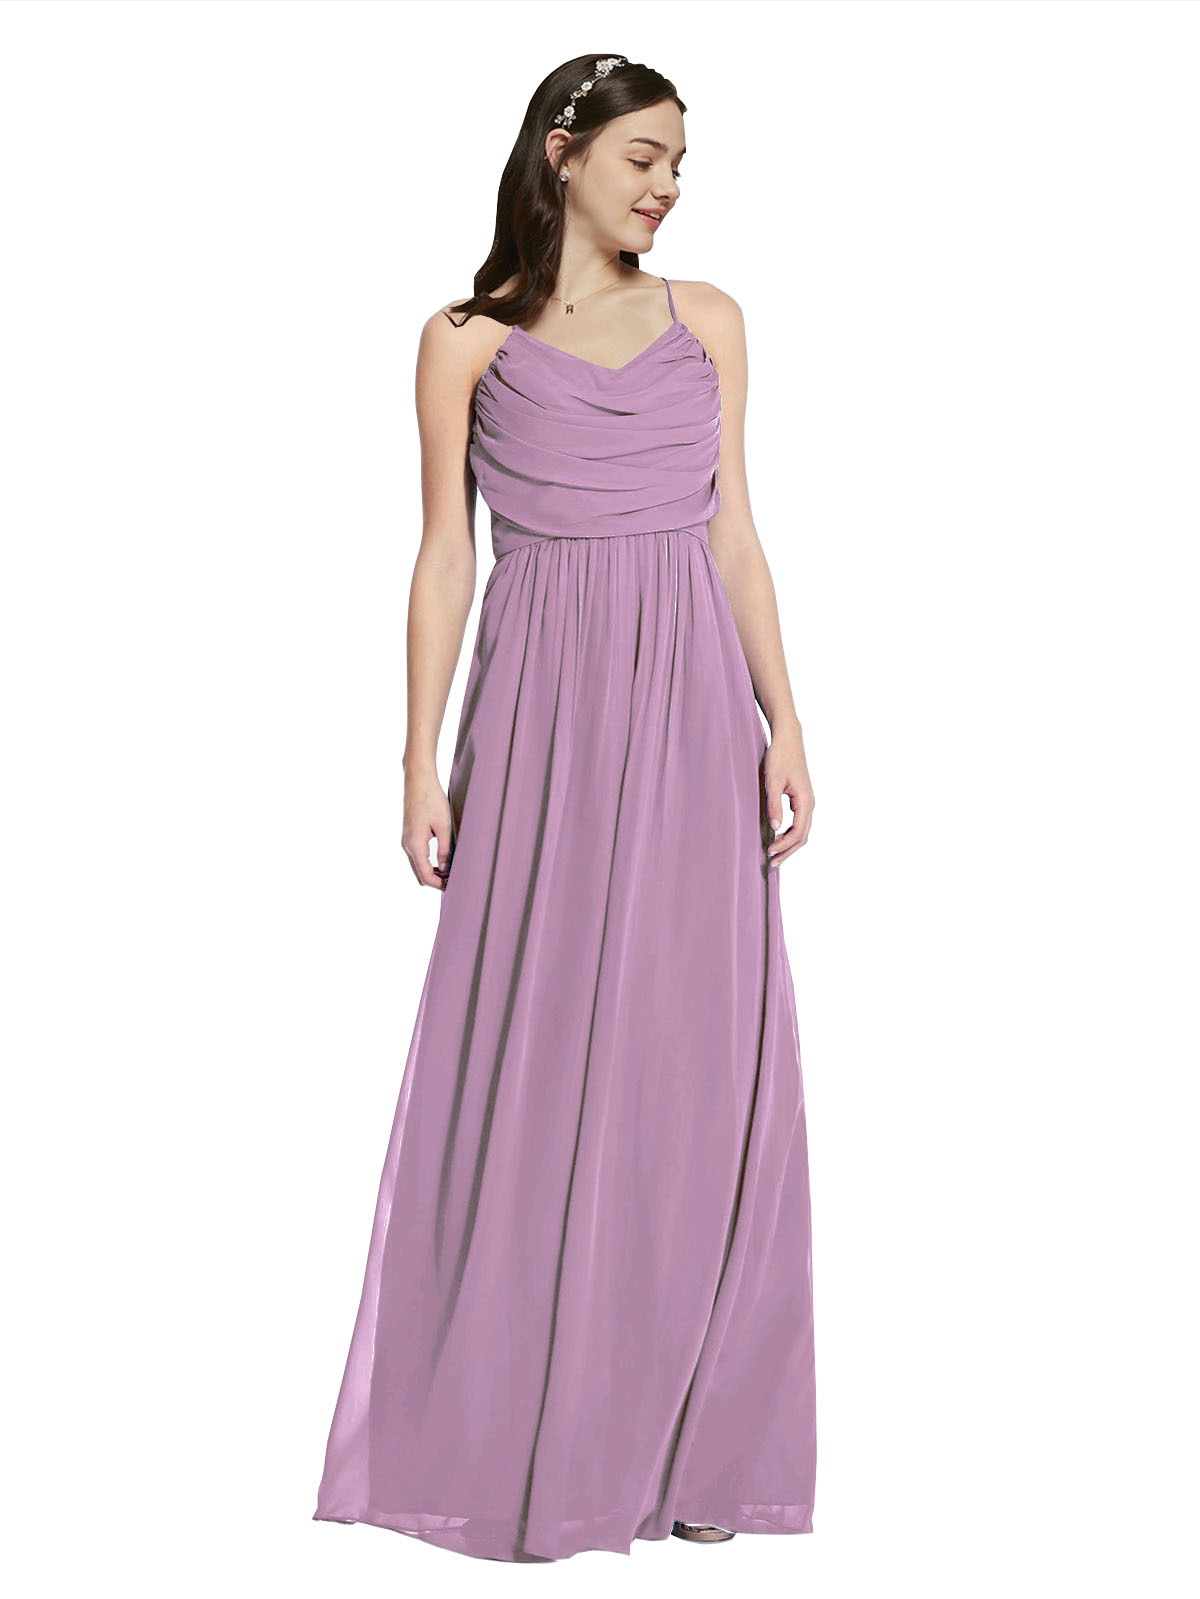 Long A-Line Cowl Sleeveless Dark Lavender Chiffon Bridesmaid Dress Jasper